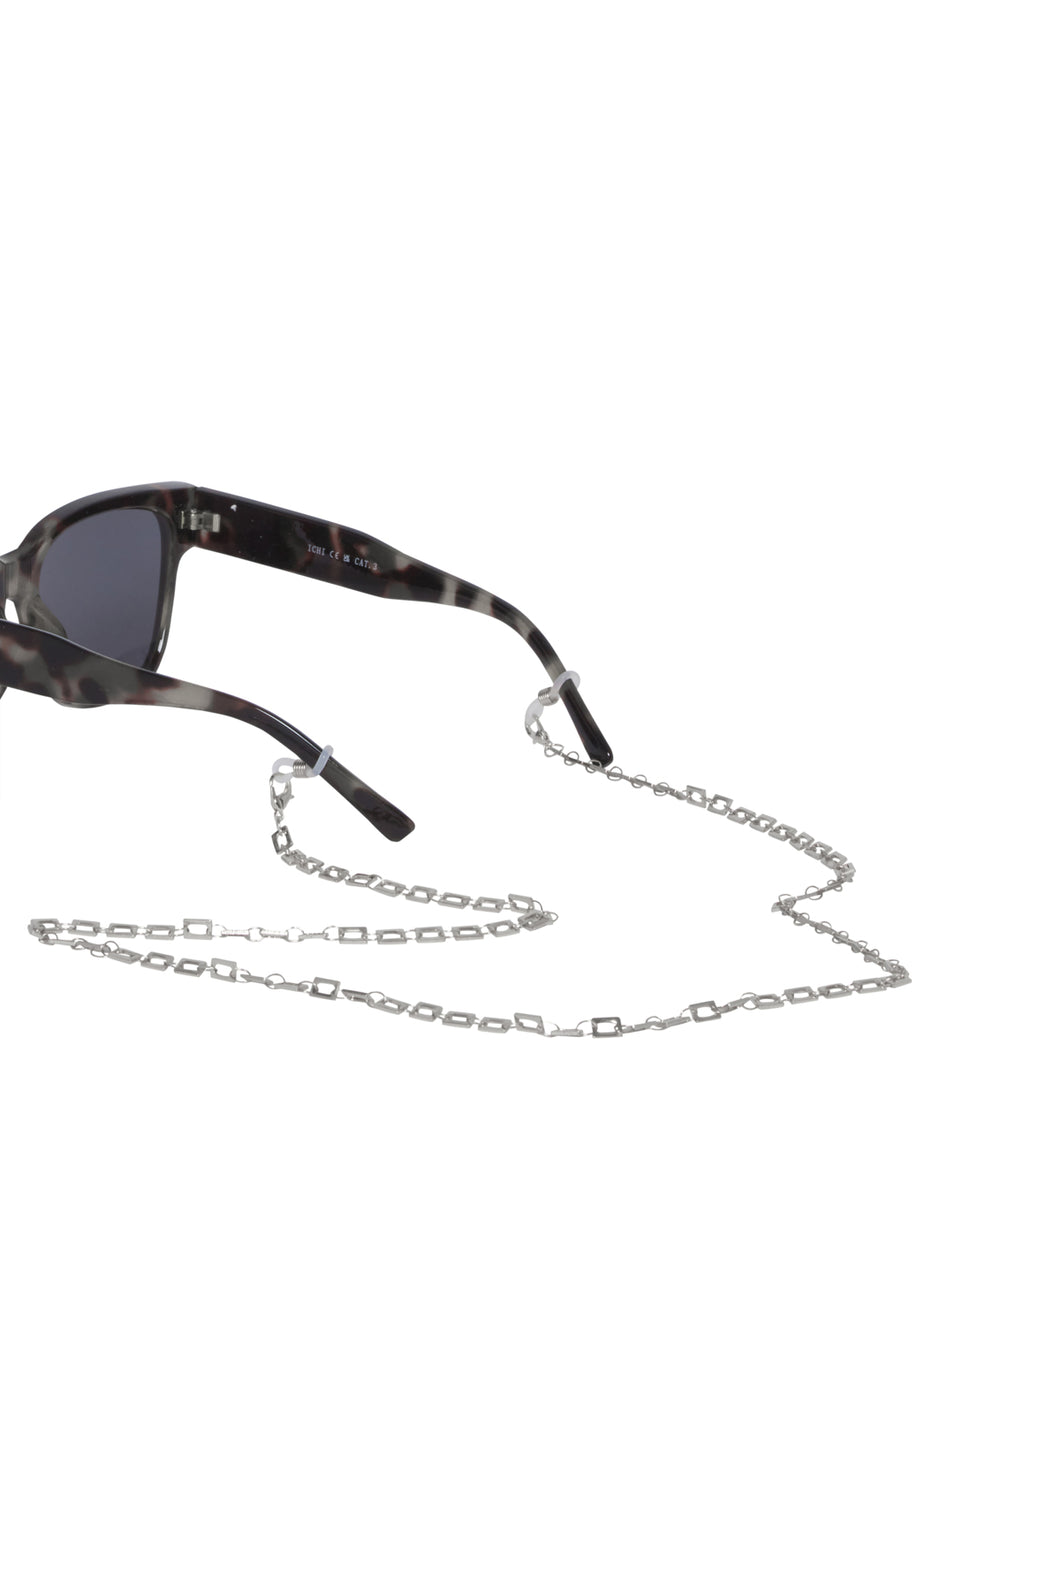 ICHI Drana Sunglasses Chain